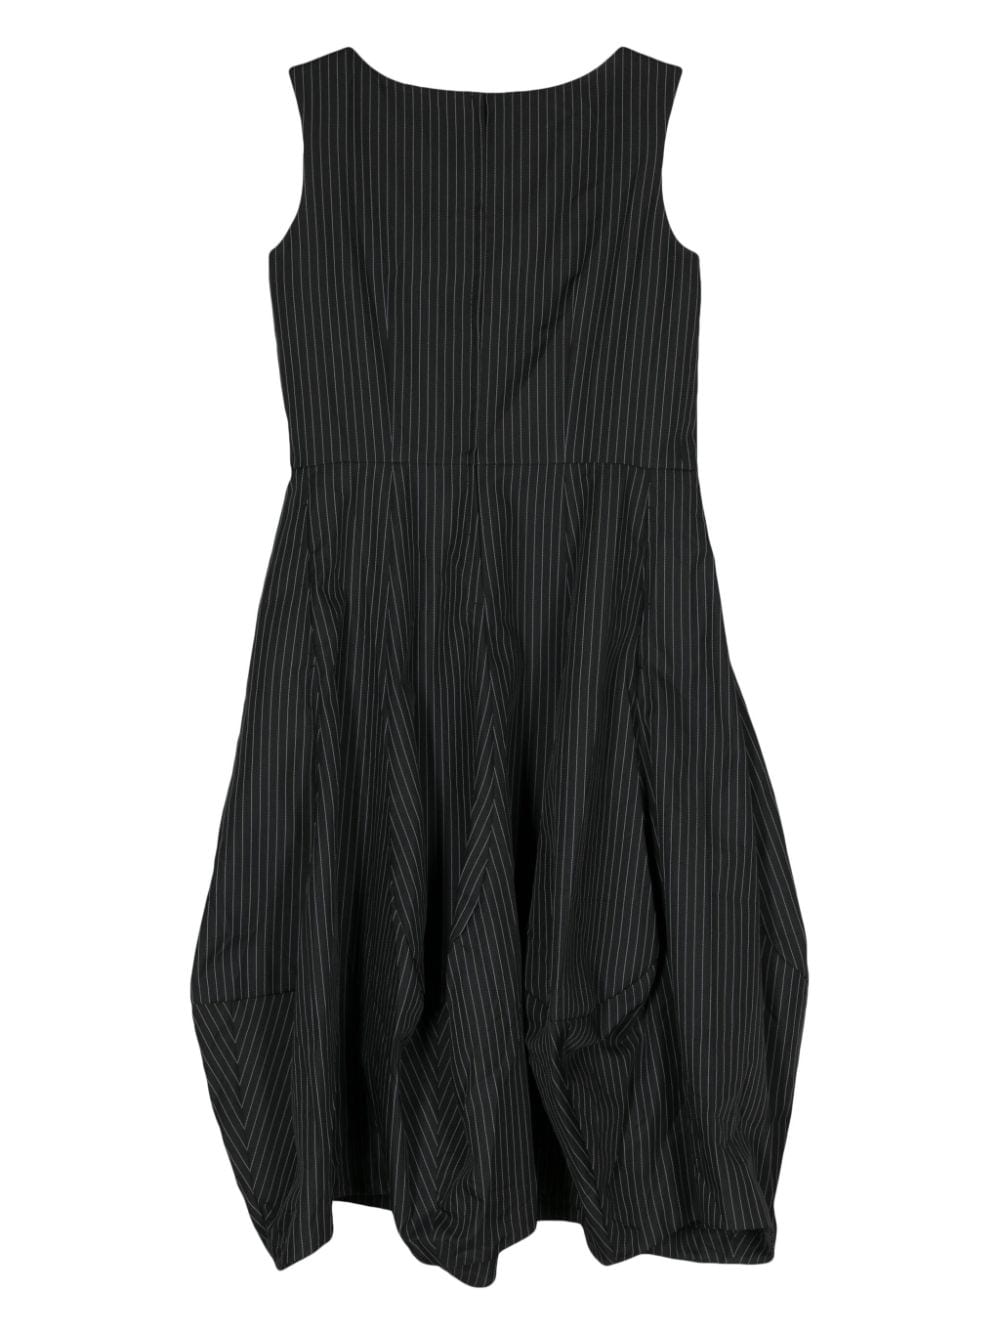 COMME DES GARÇONS Black Gabardine Pinstripe Boat Neck Dress with Flared Skirt